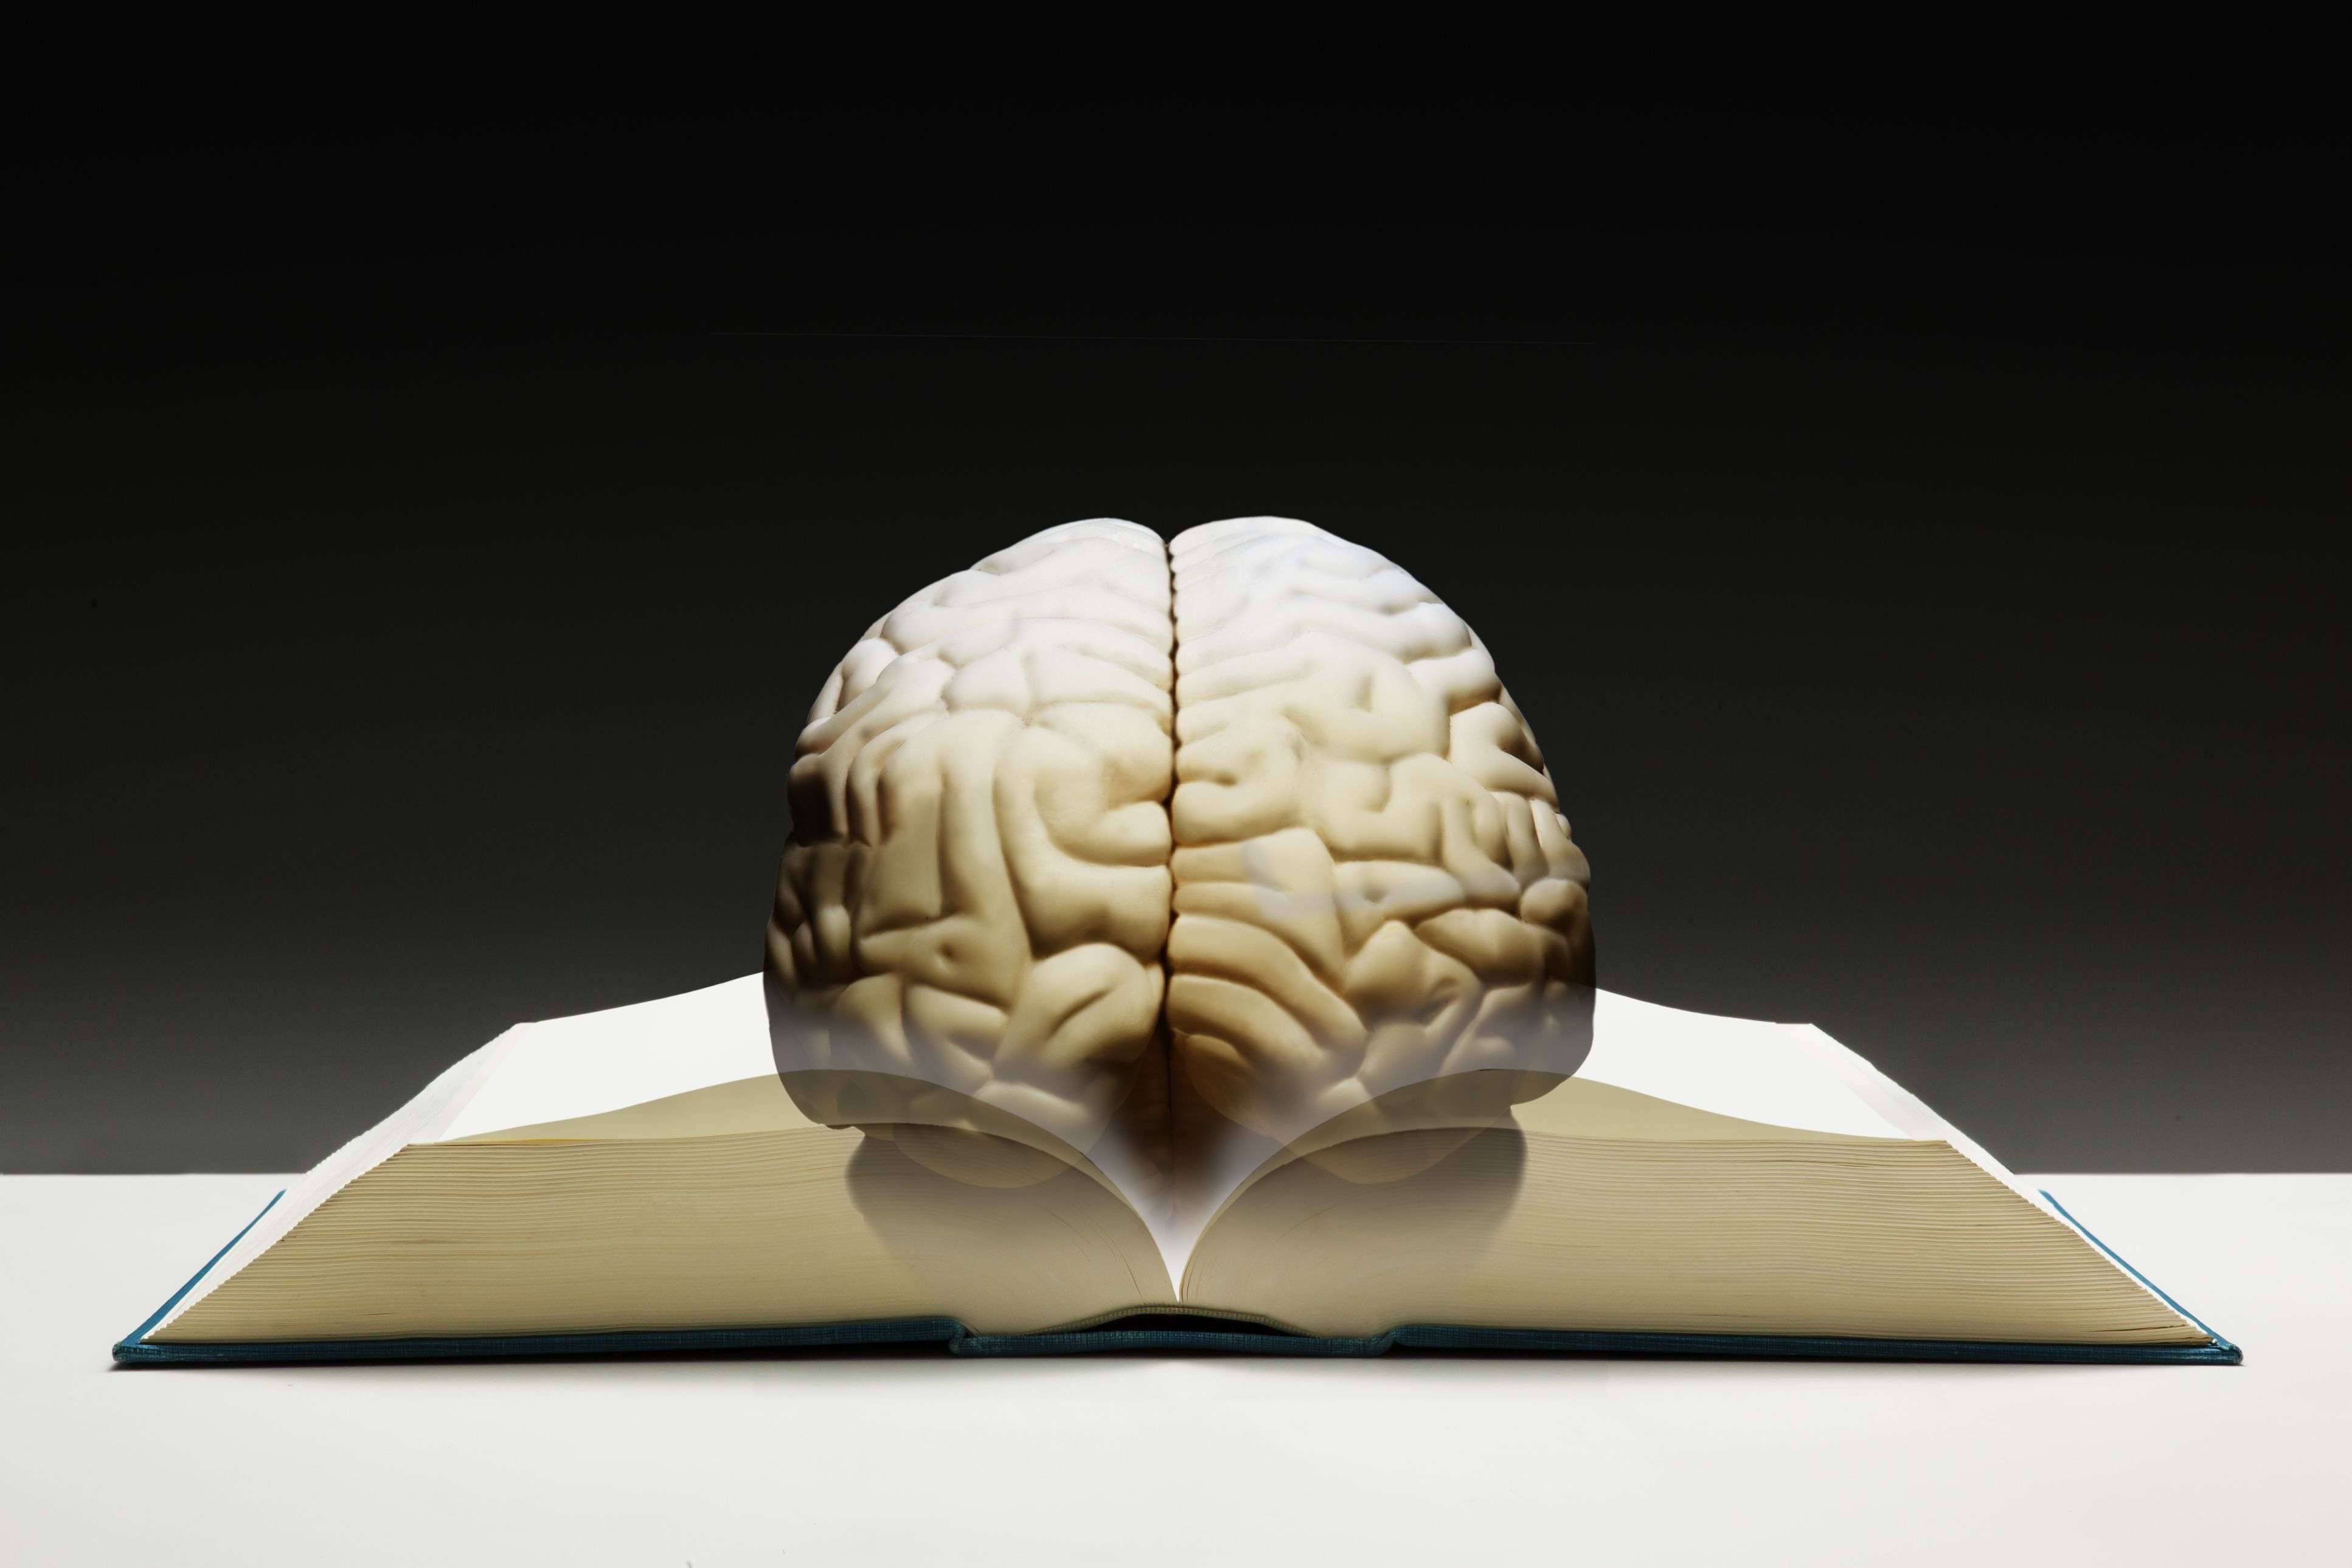 Book brain. Мозг знания. Книга мозг. Мозг креатив. Чтение книг мозг.